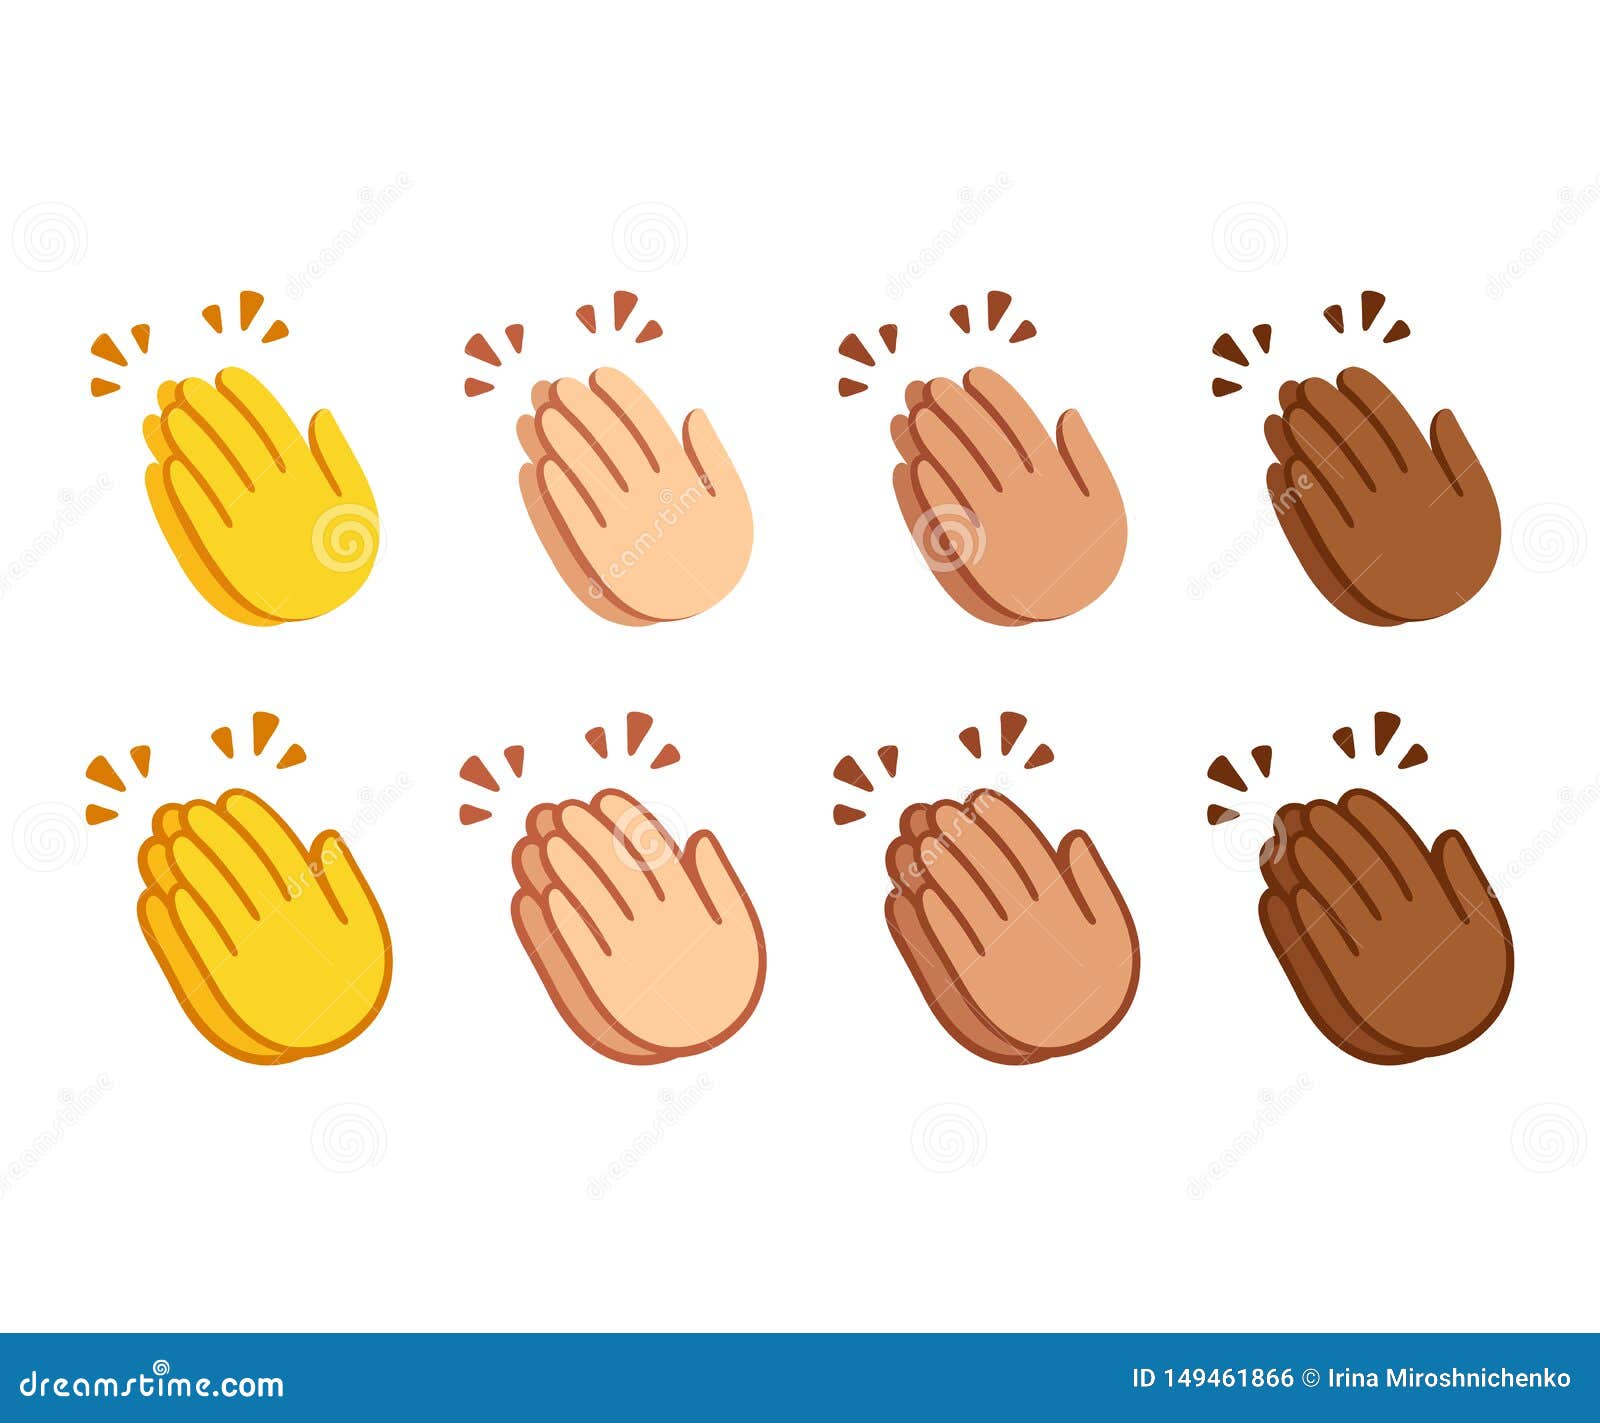 clapping hands emoji set